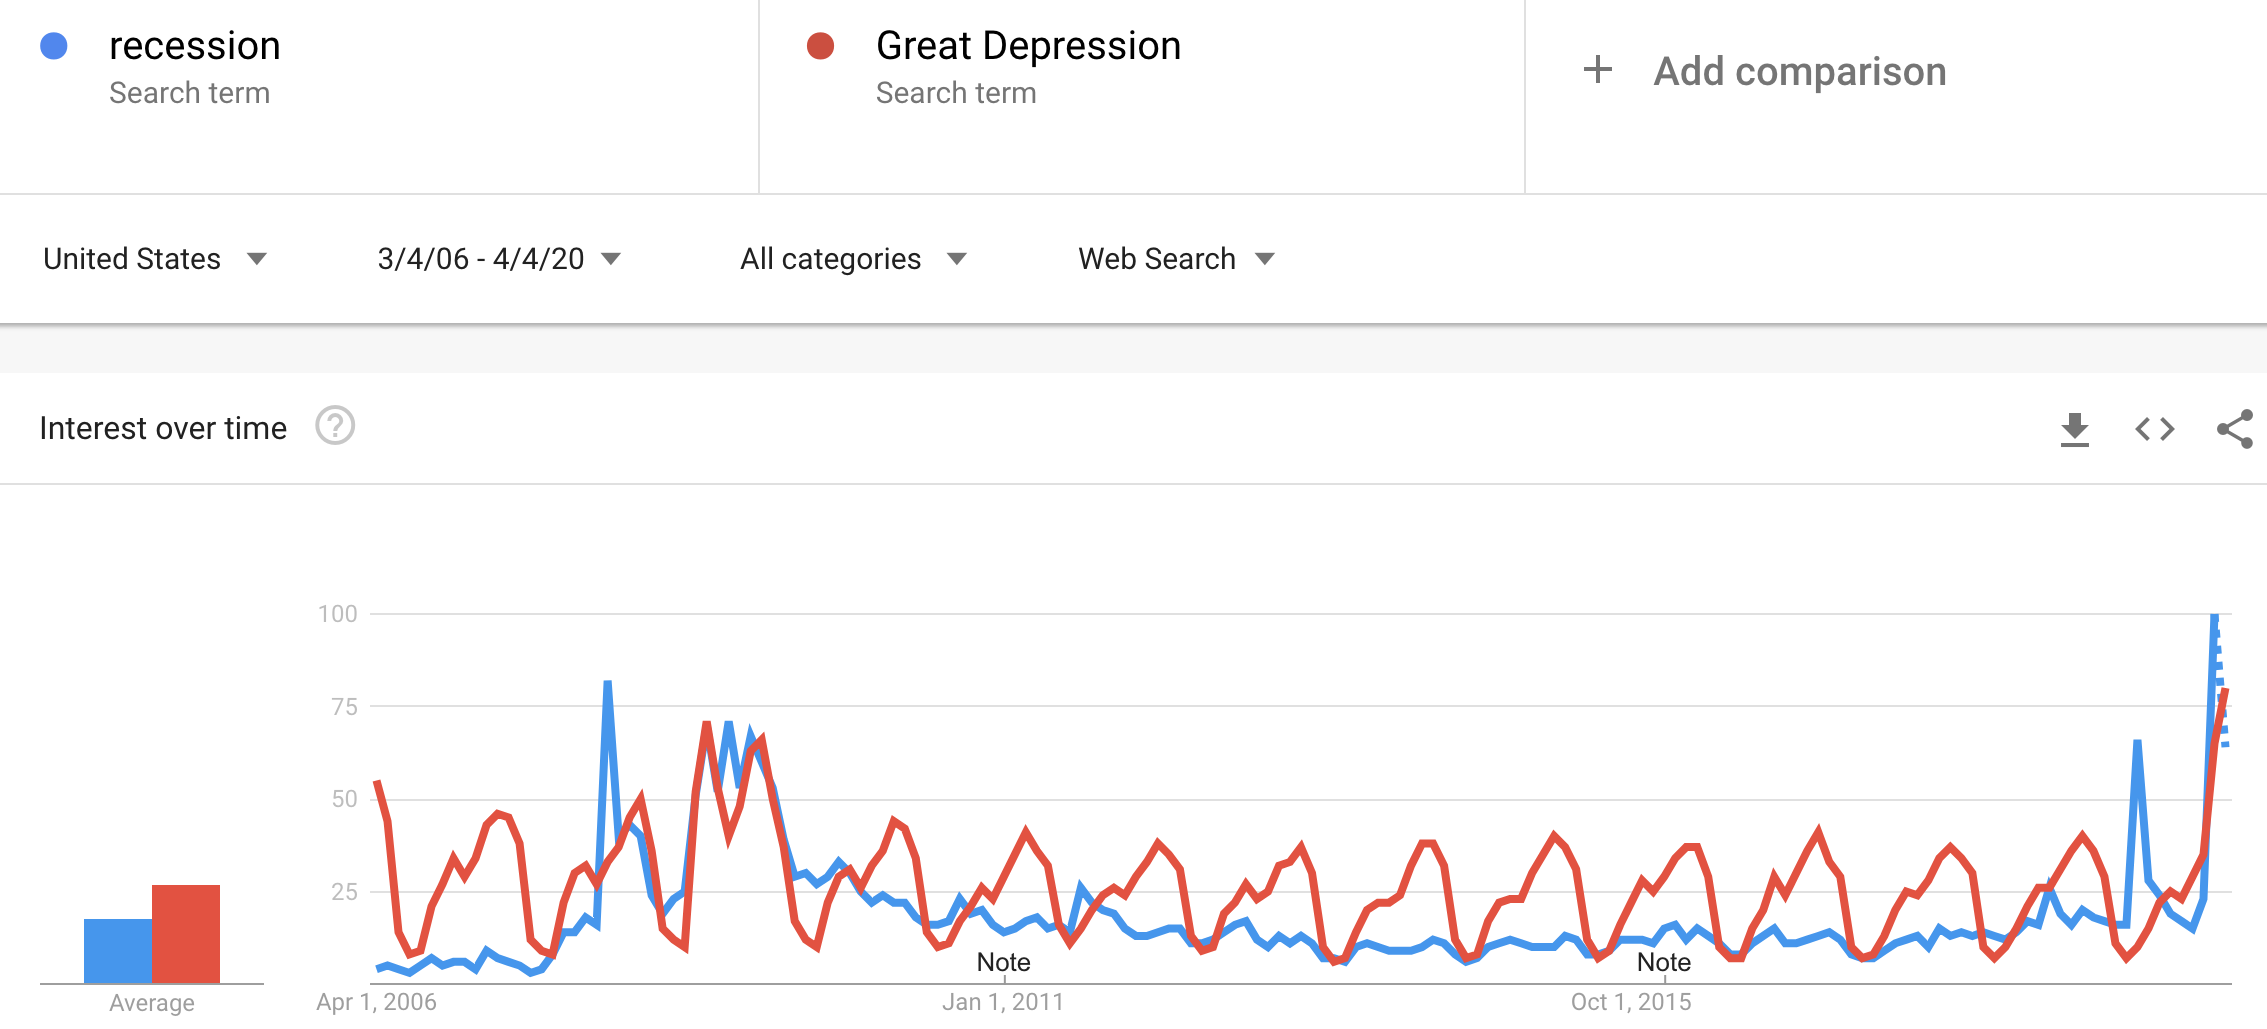 Google trends for searches comparing recession vs Great Depression